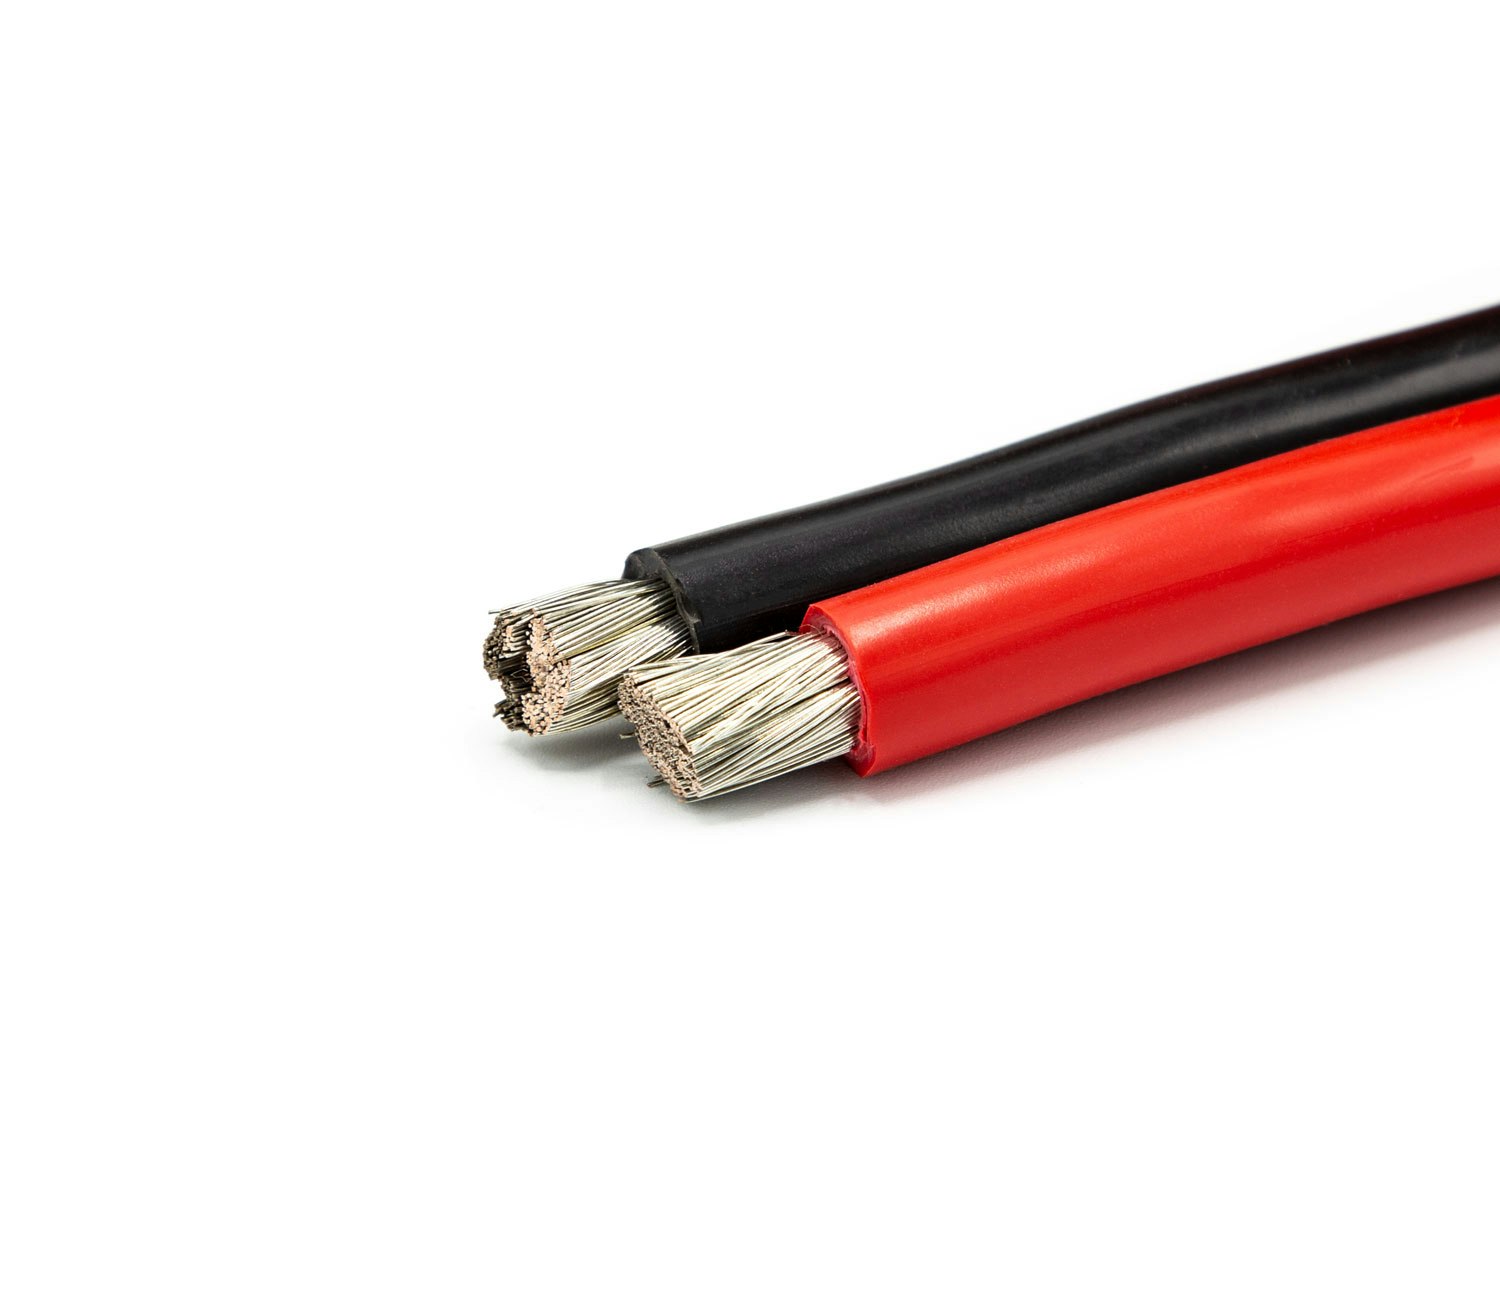  OCEANFLEX - Tinned battery cable 16mm2, 100m, Black